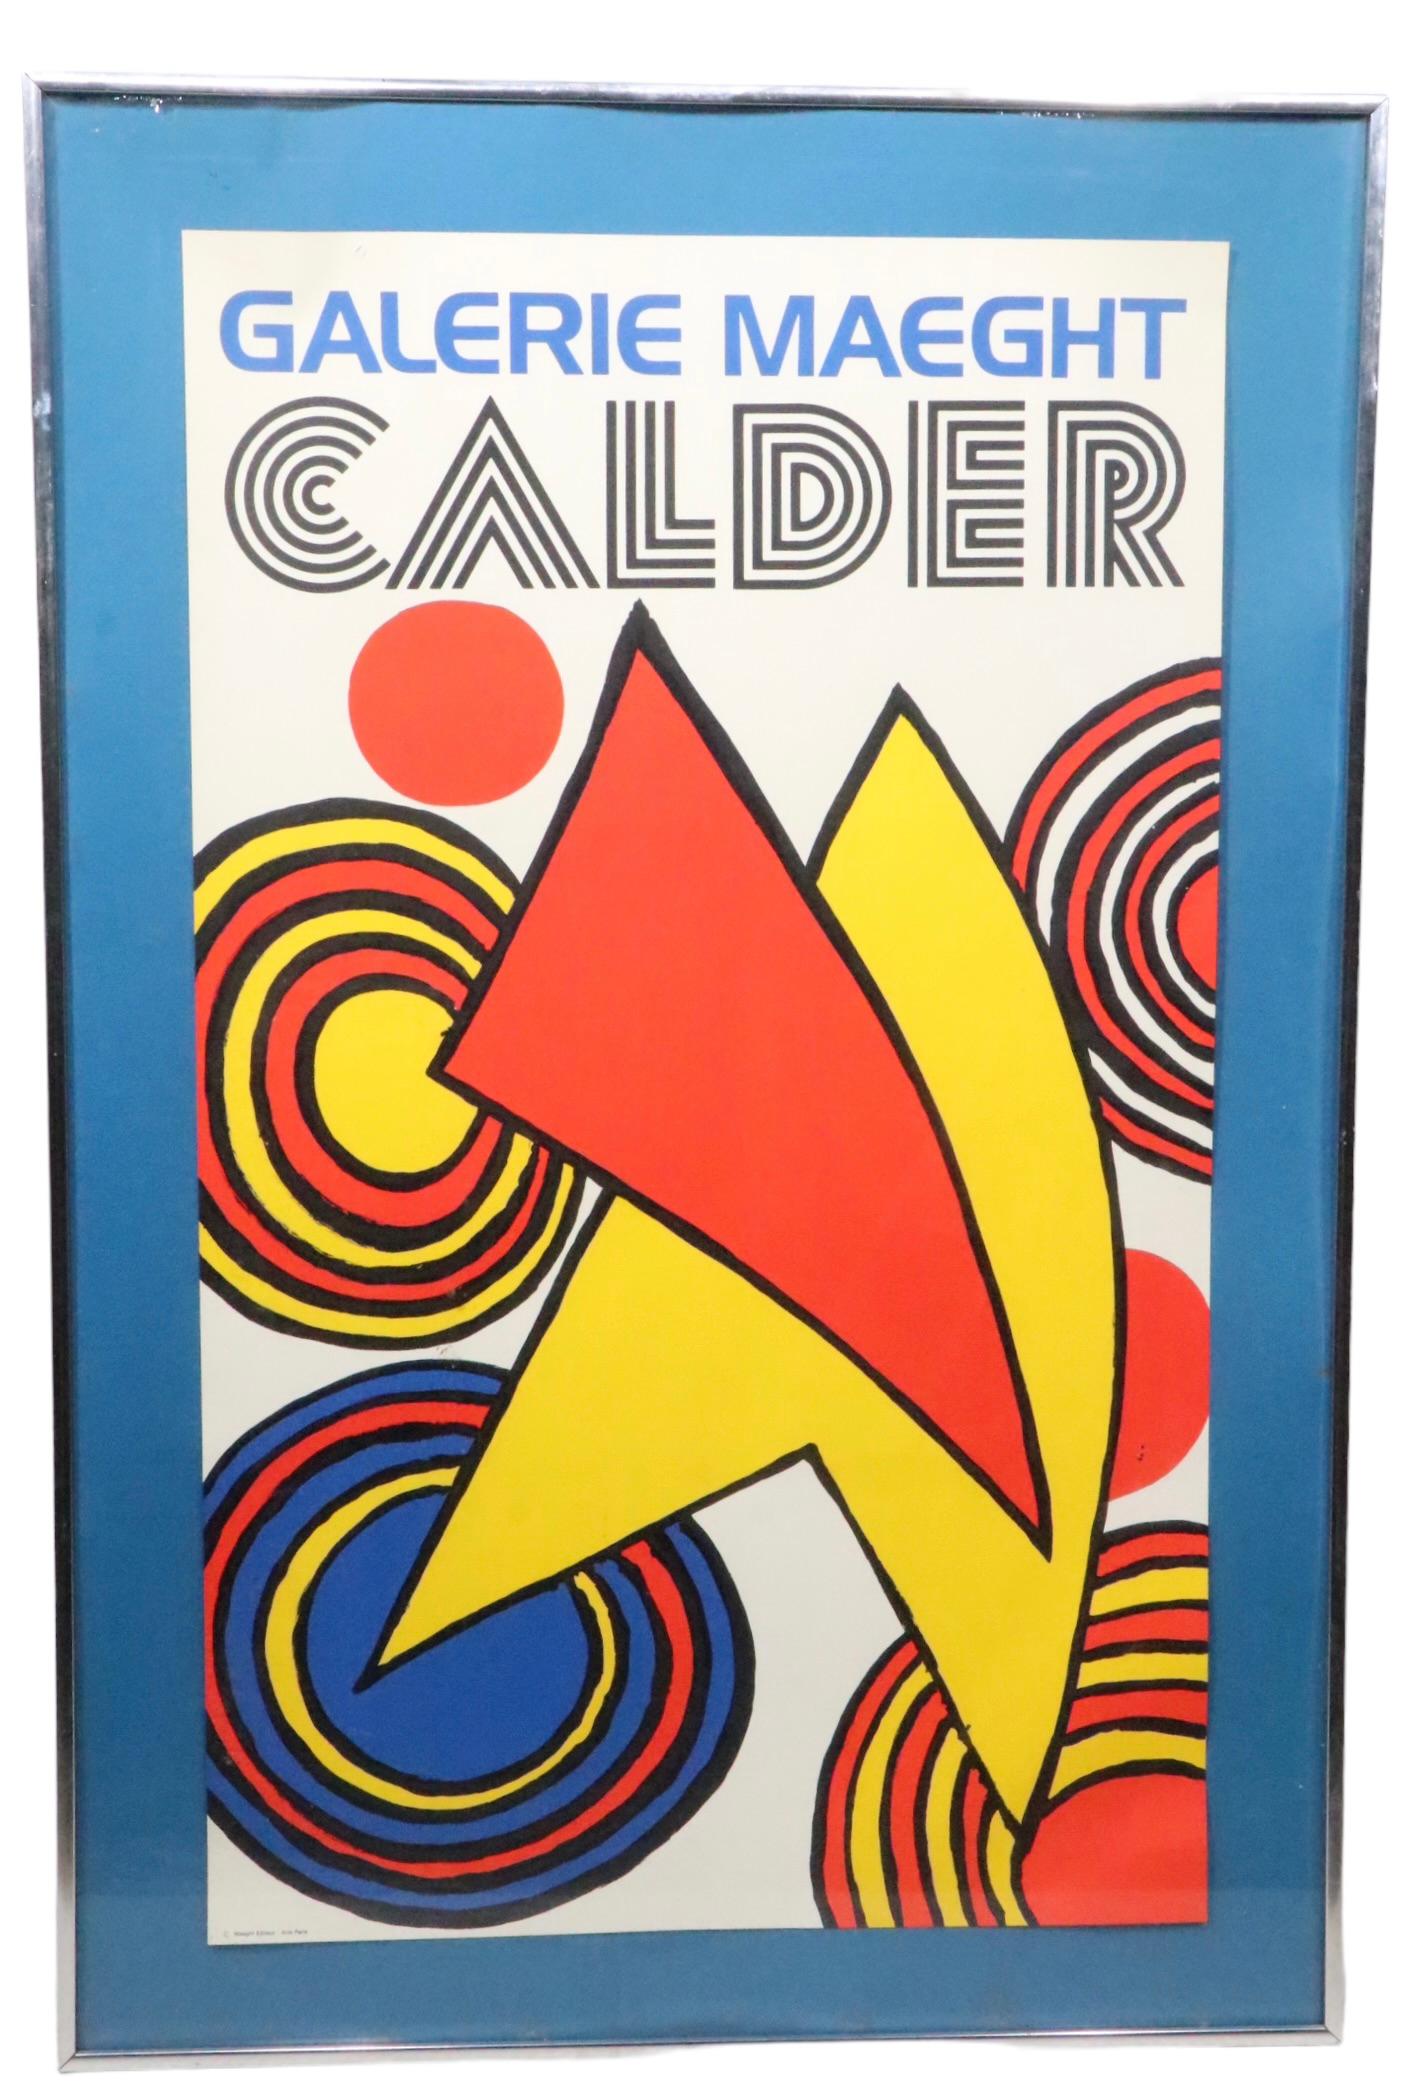 Late 20th Century  Framed Calder Galerie Maeght Lithograph  Poster Maeght Editeur - Arte Paris 70s For Sale